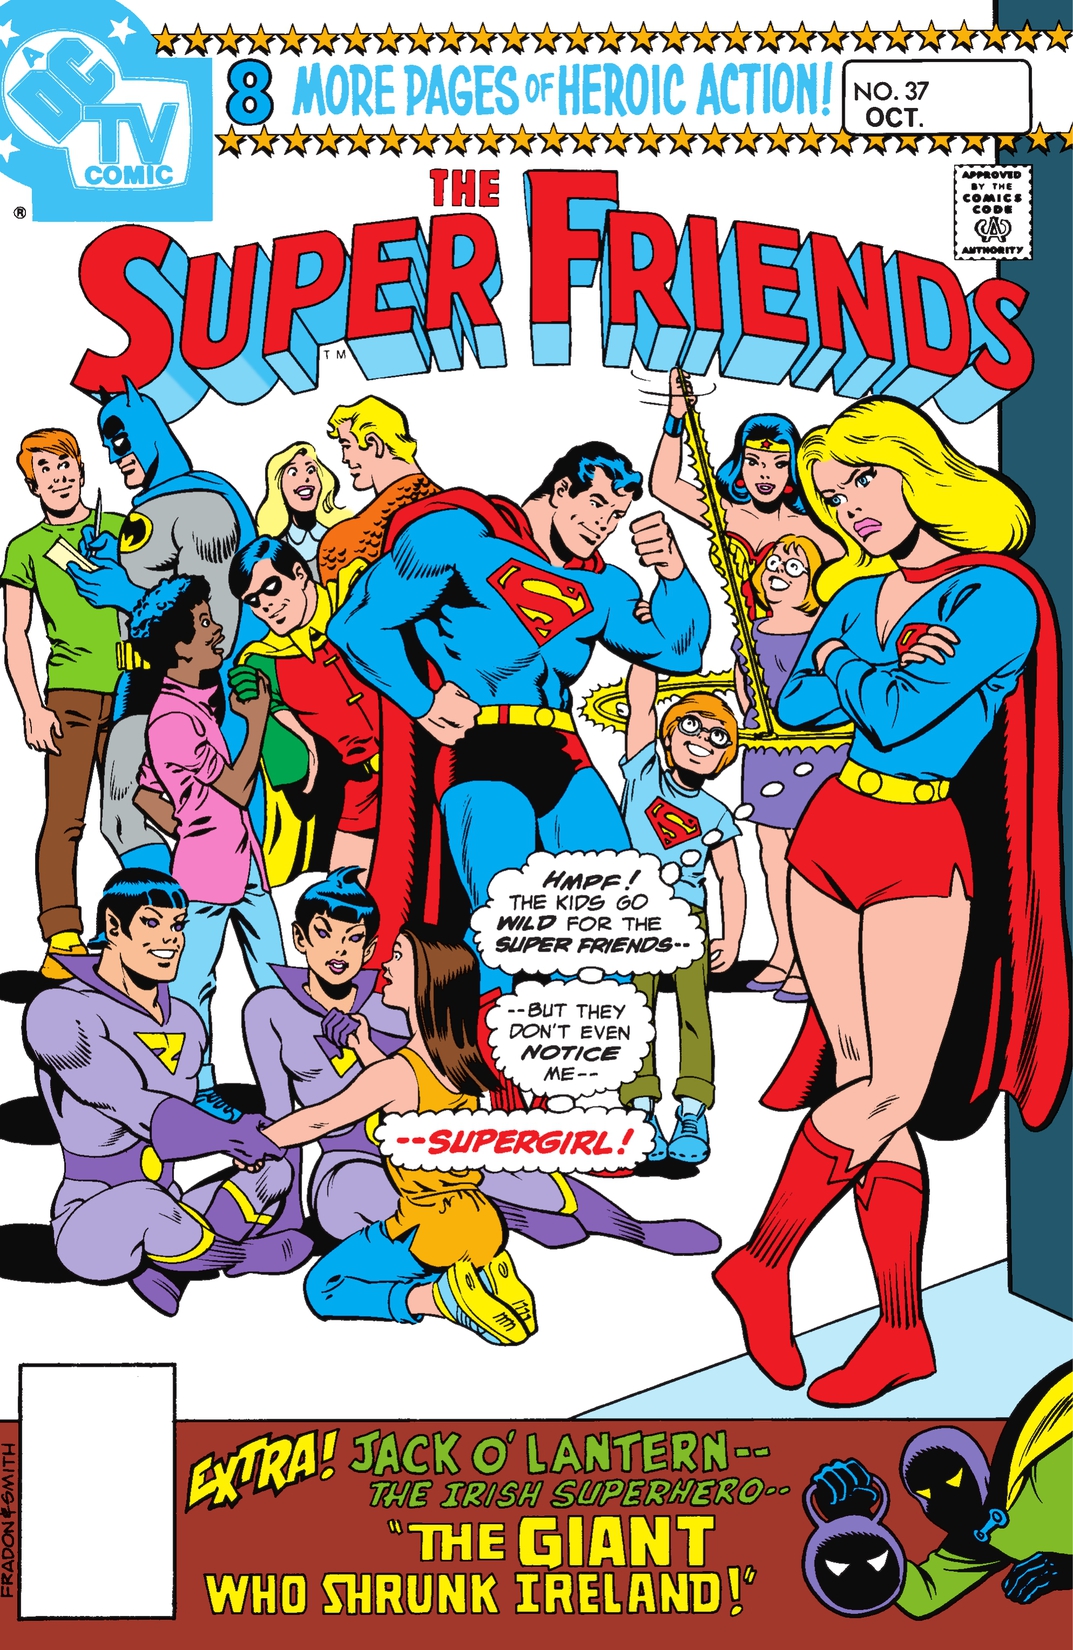 Super Friends (1976-1981) #37 preview images